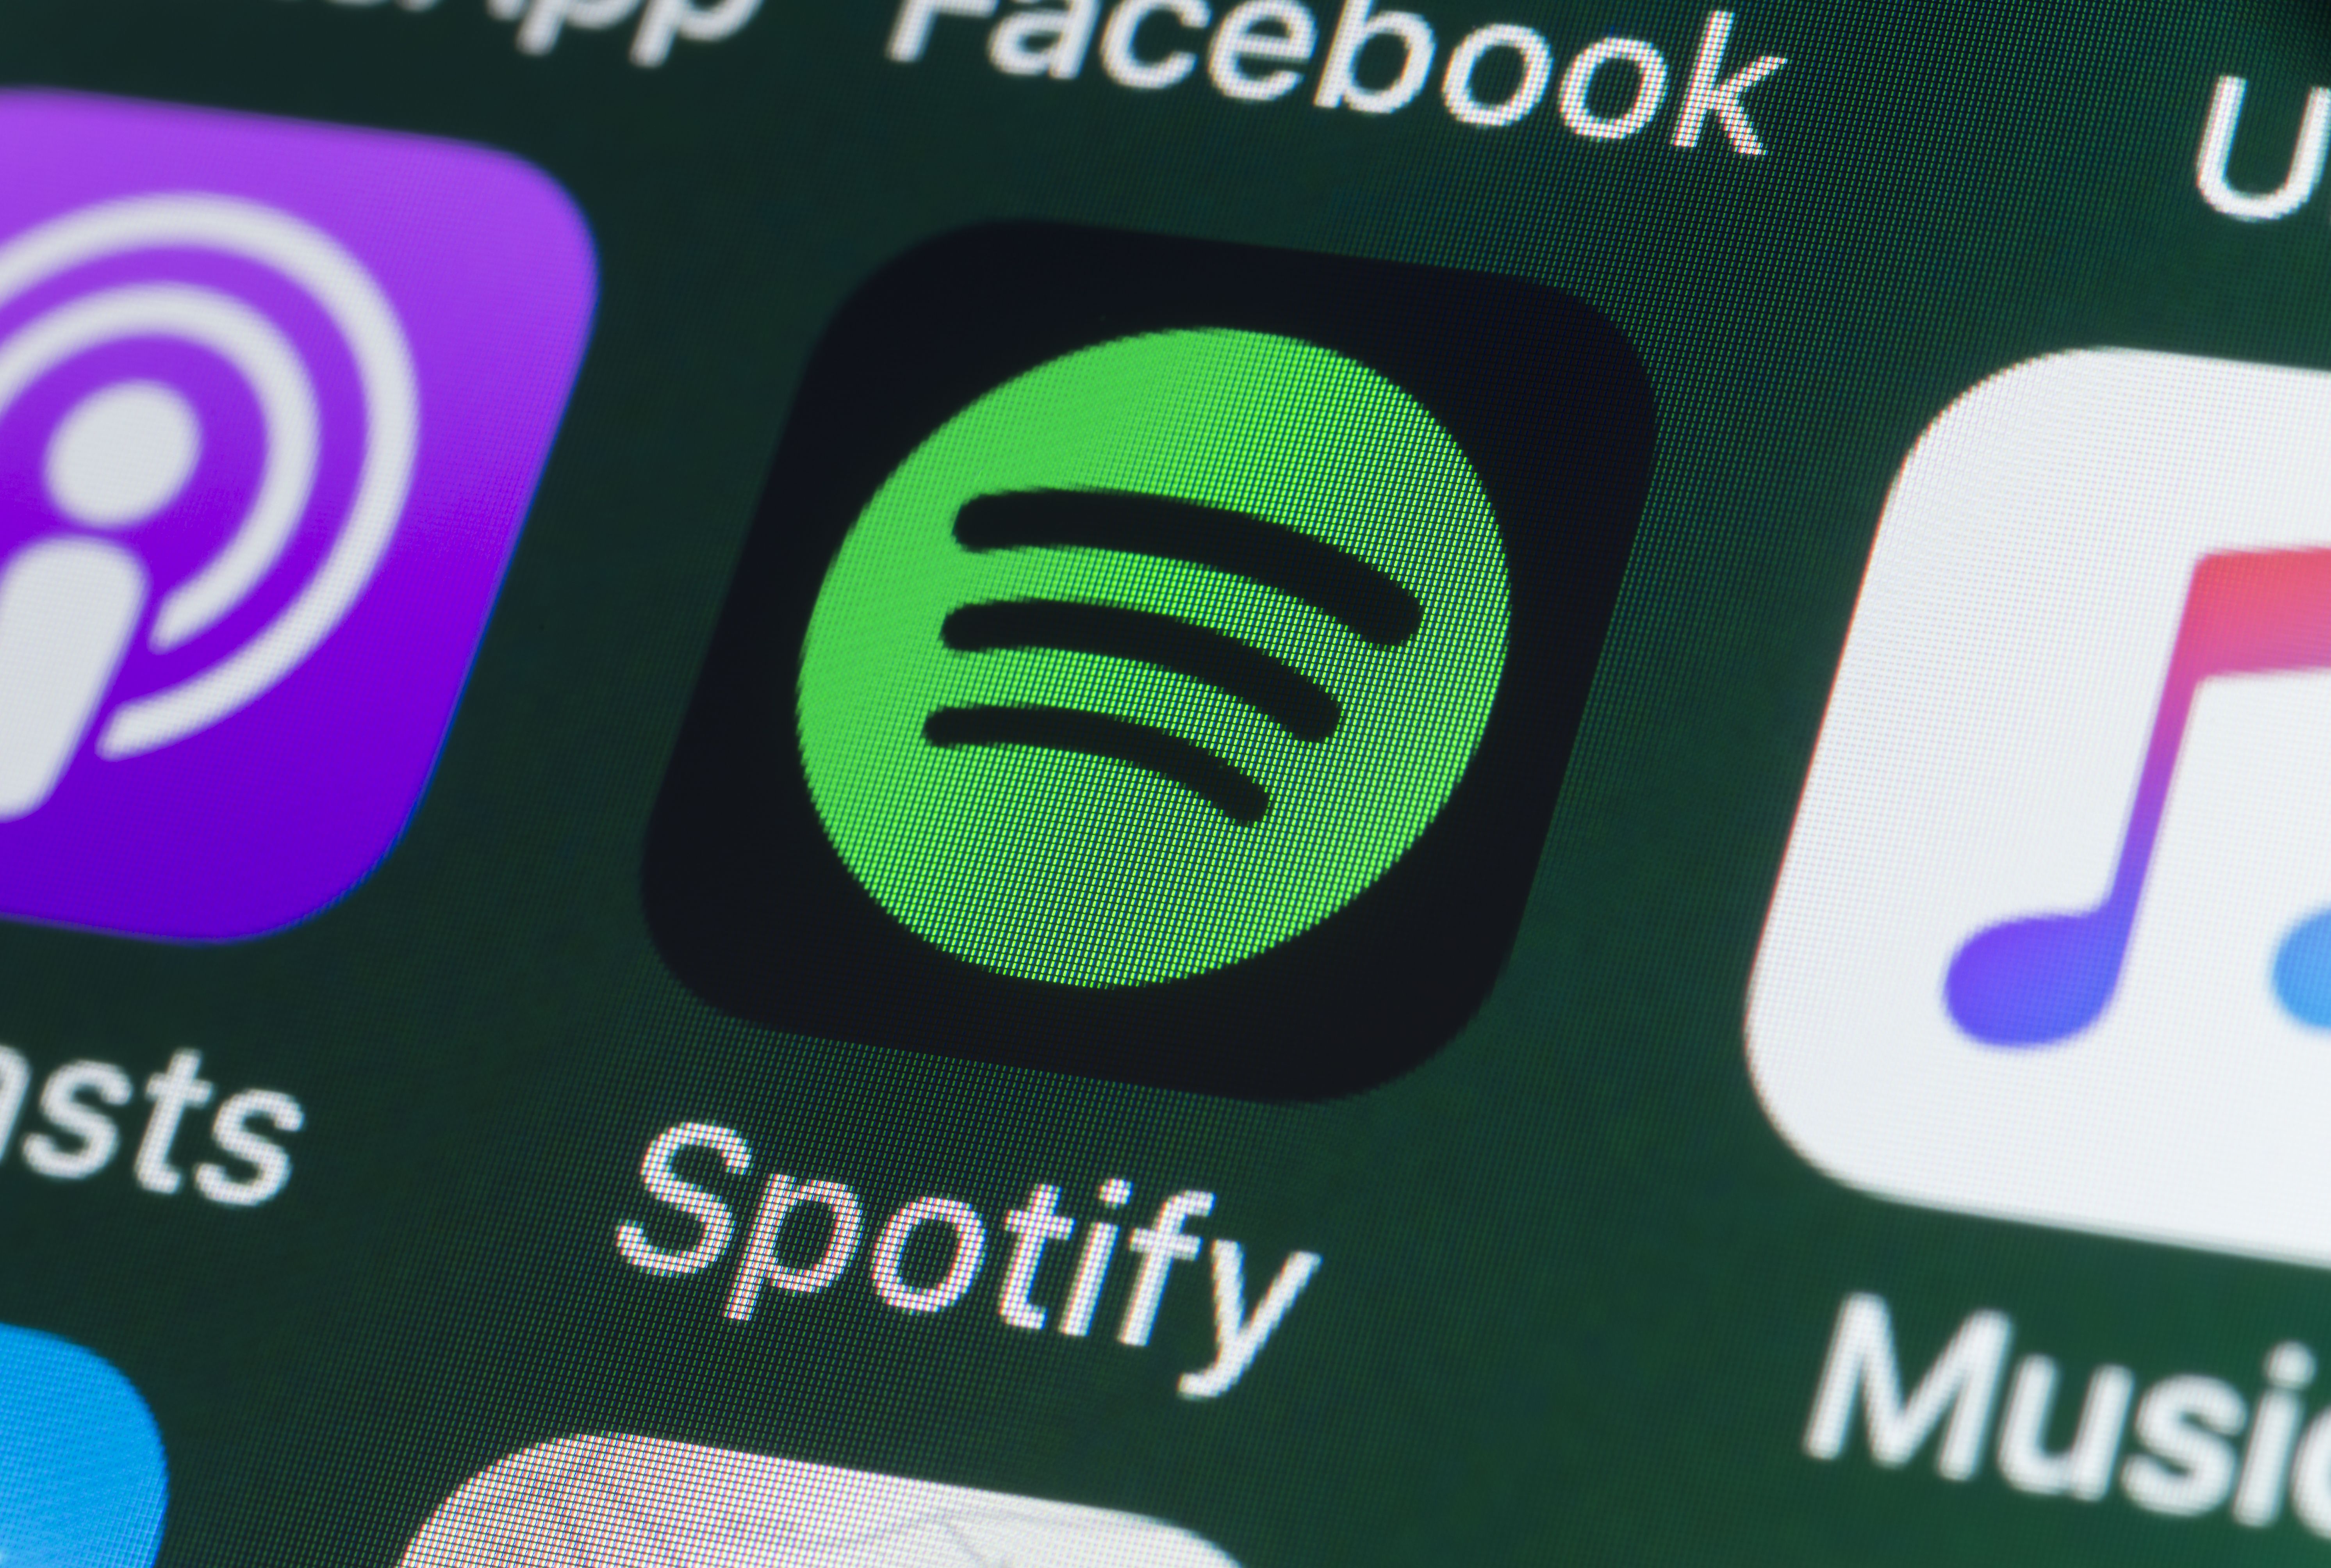 Does Spotify Premium Offer Free Hulu